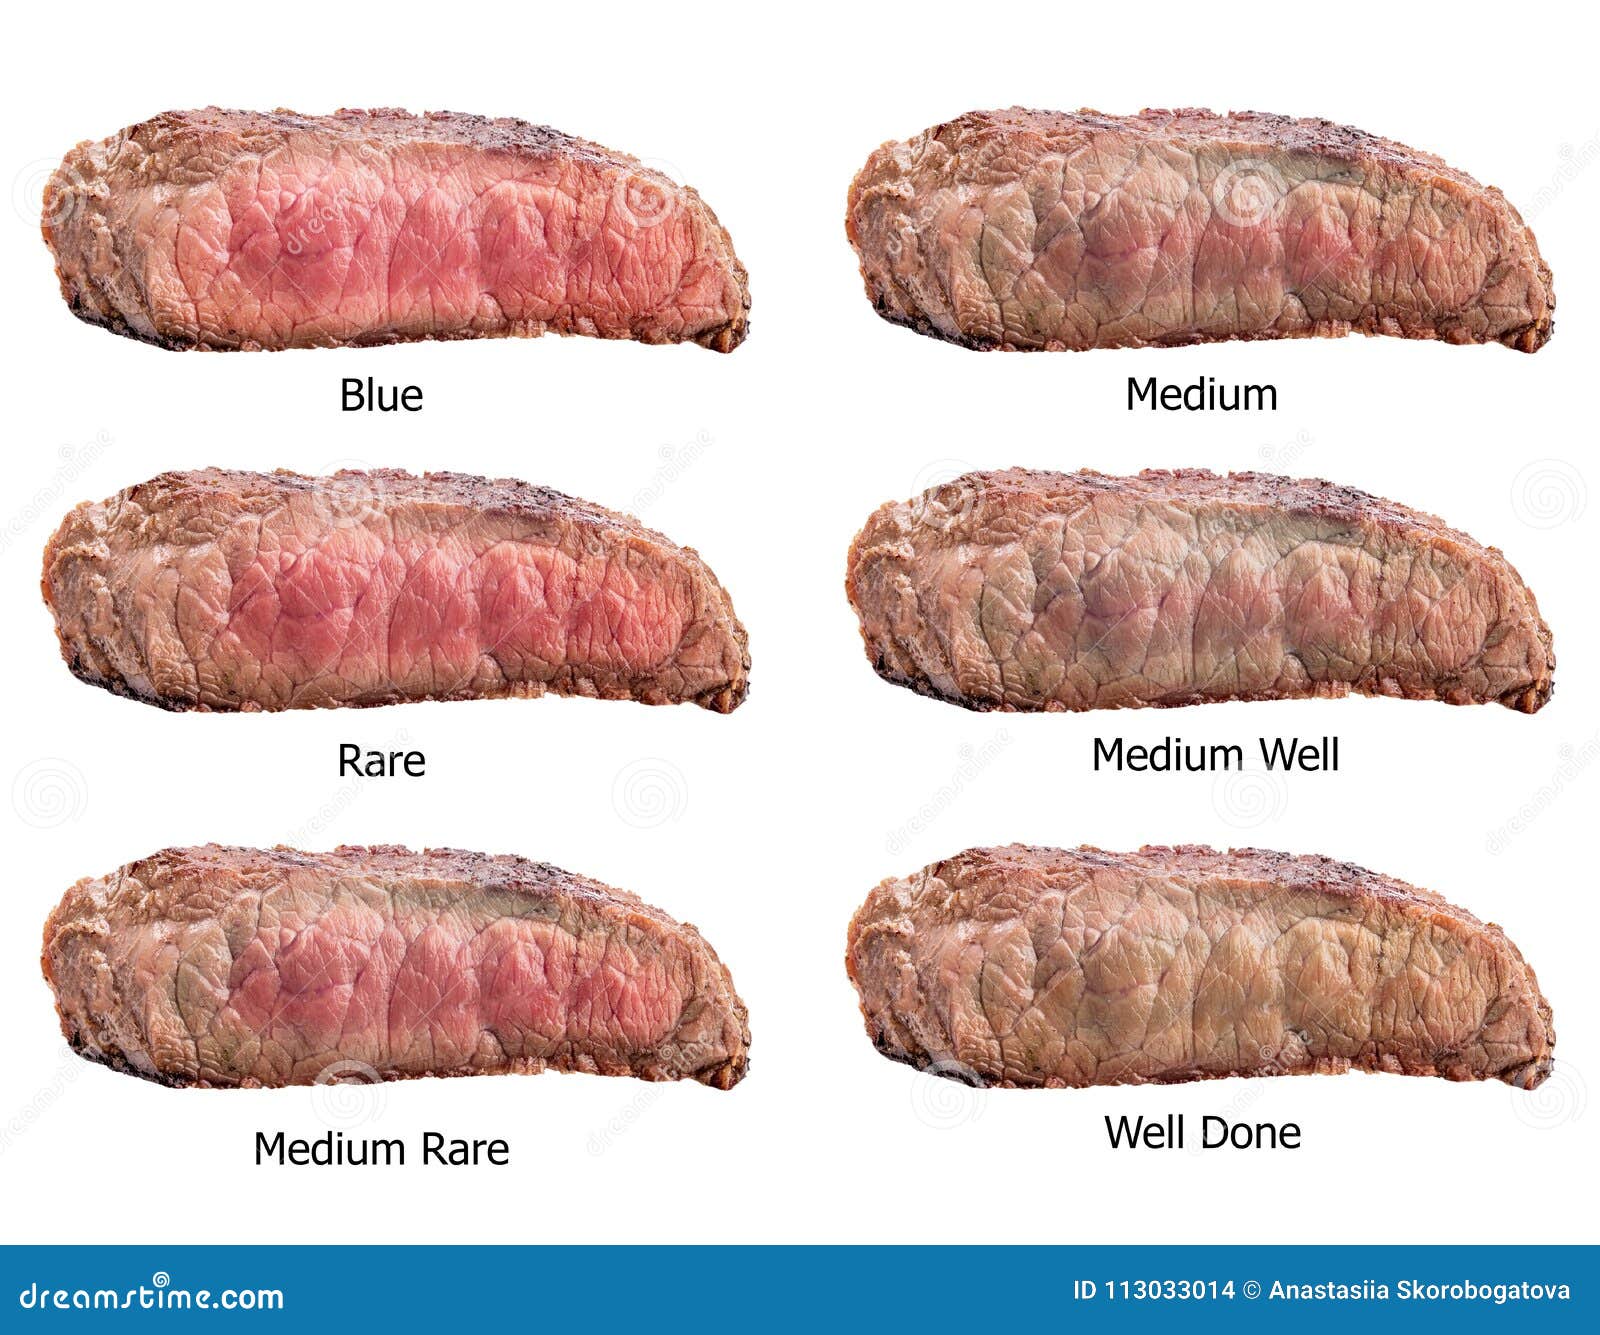 raw steaks frying degrees: rare, blue, medium, medium rare, medium well, well done